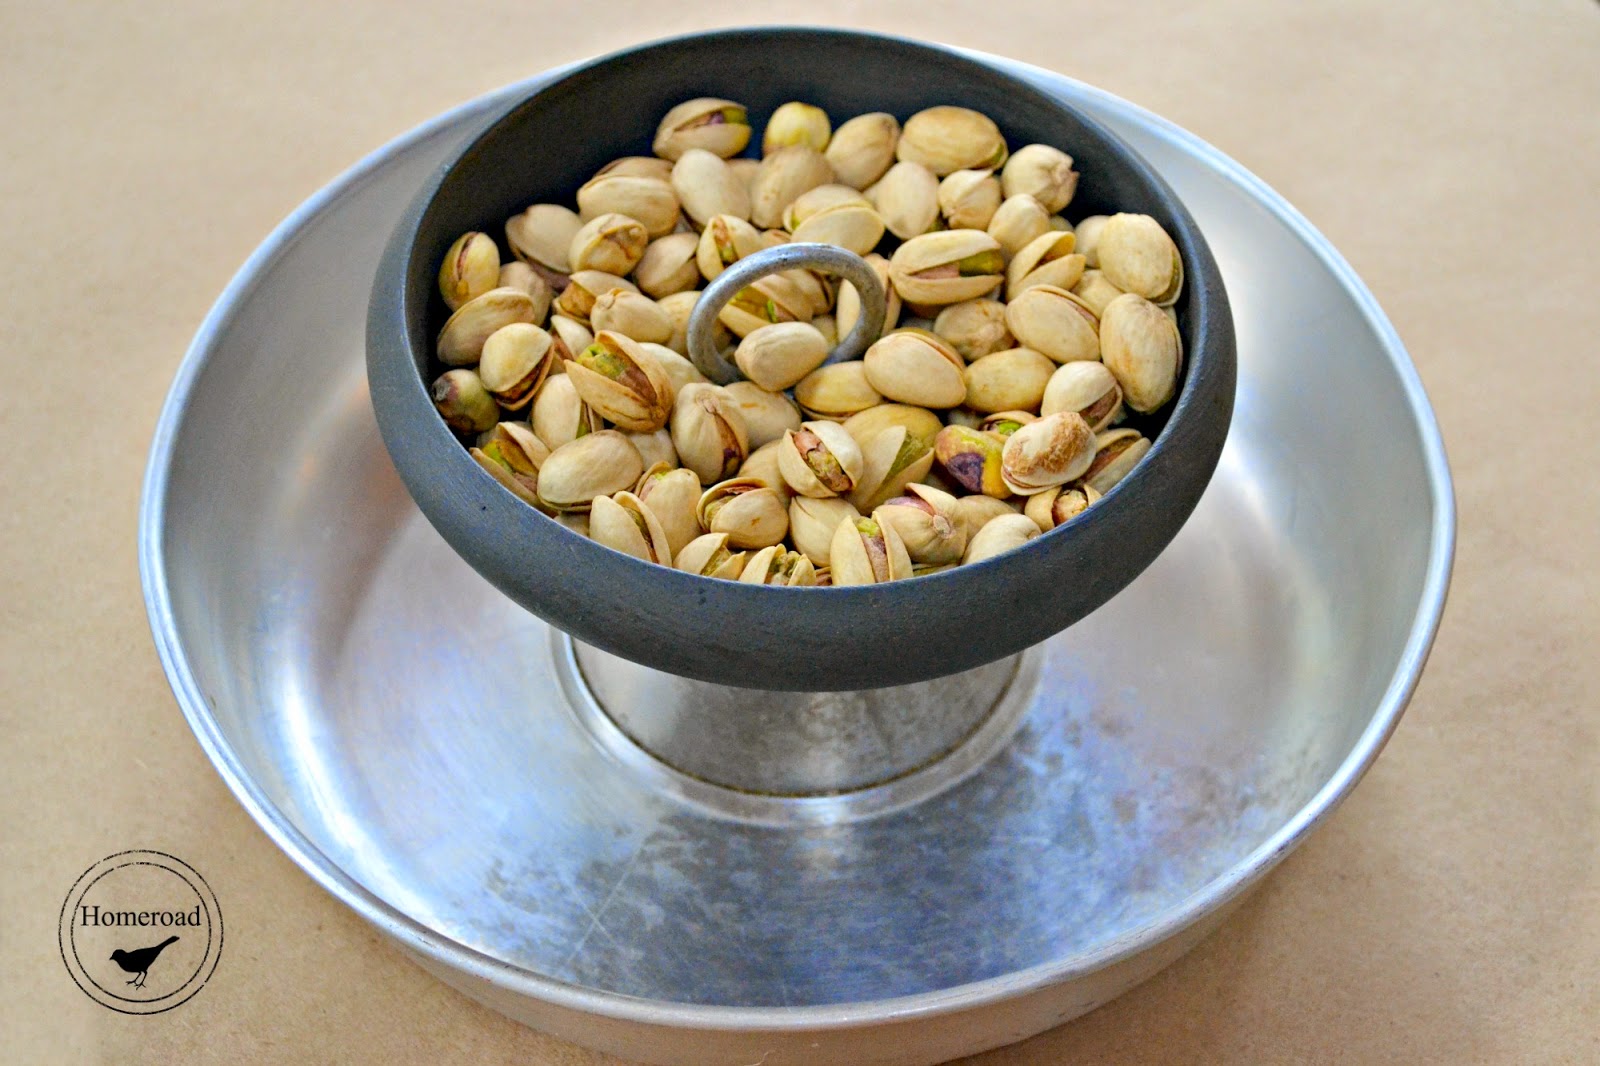 repurposed pistachio bowl www.homeroad.net